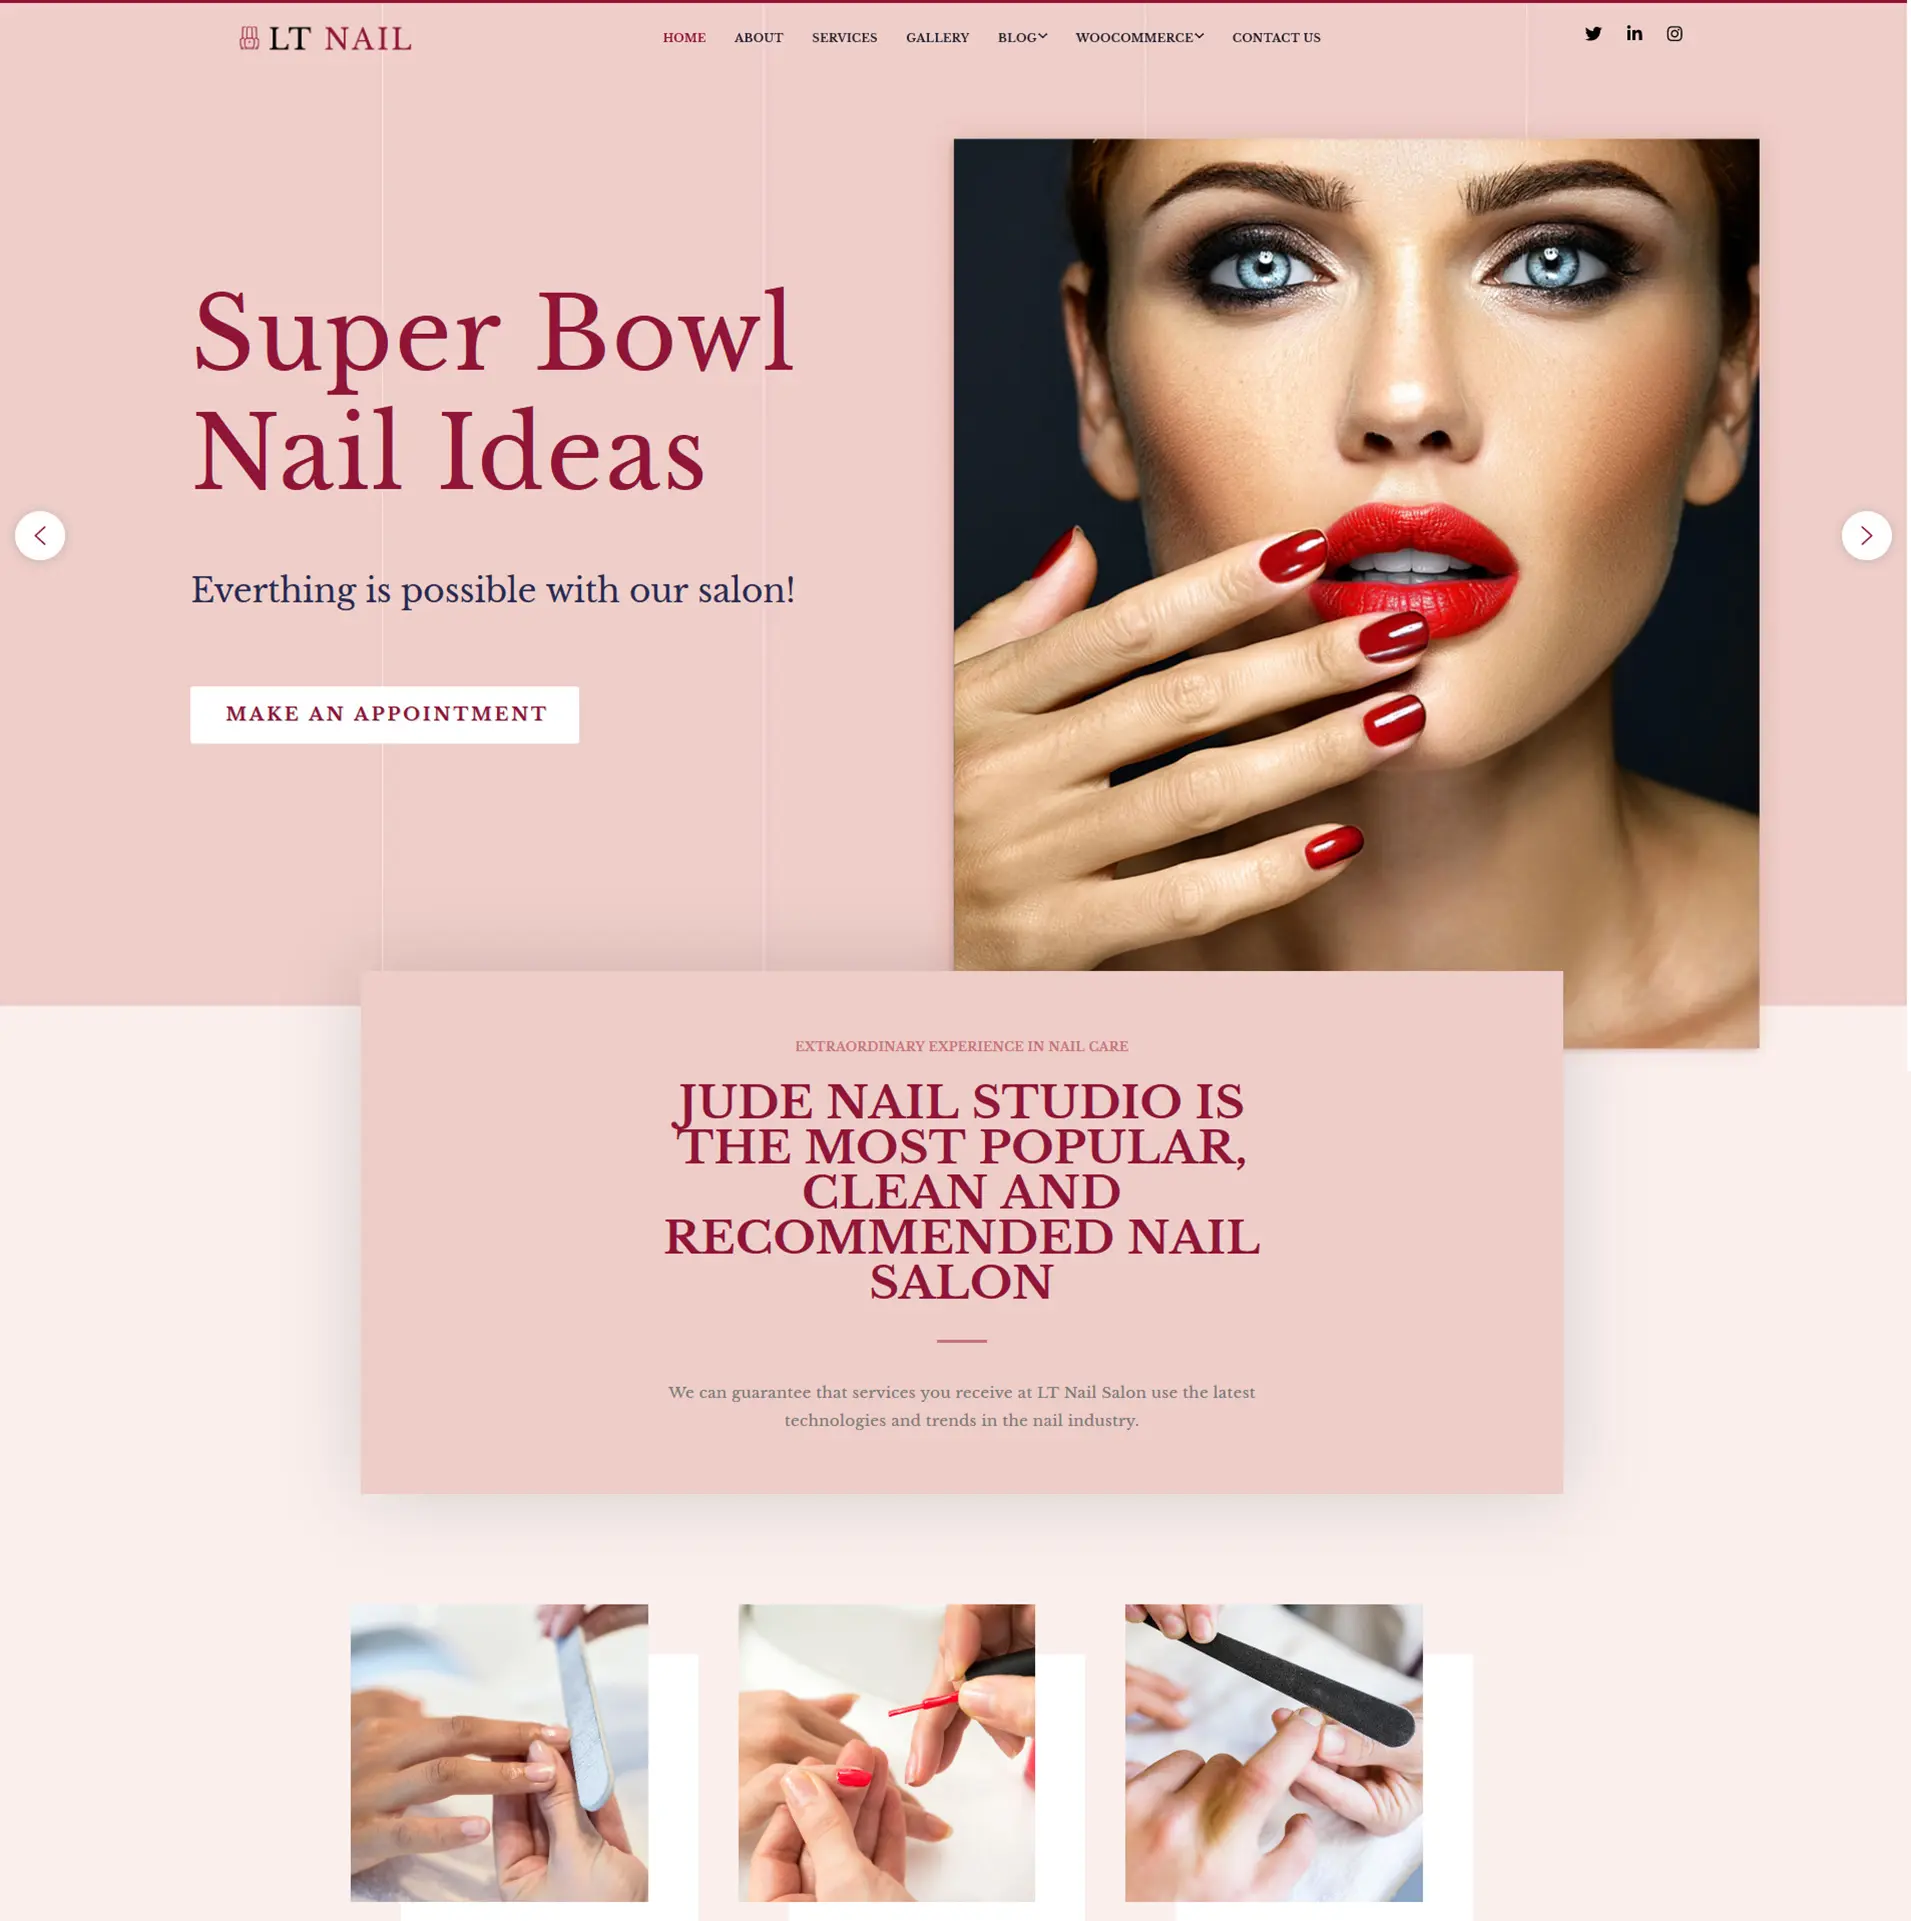 WordPress Template Beauty Salon - Beautiful WordPress Themes for Beauty  Saloon - Templates & Other Resources at Templatation.com